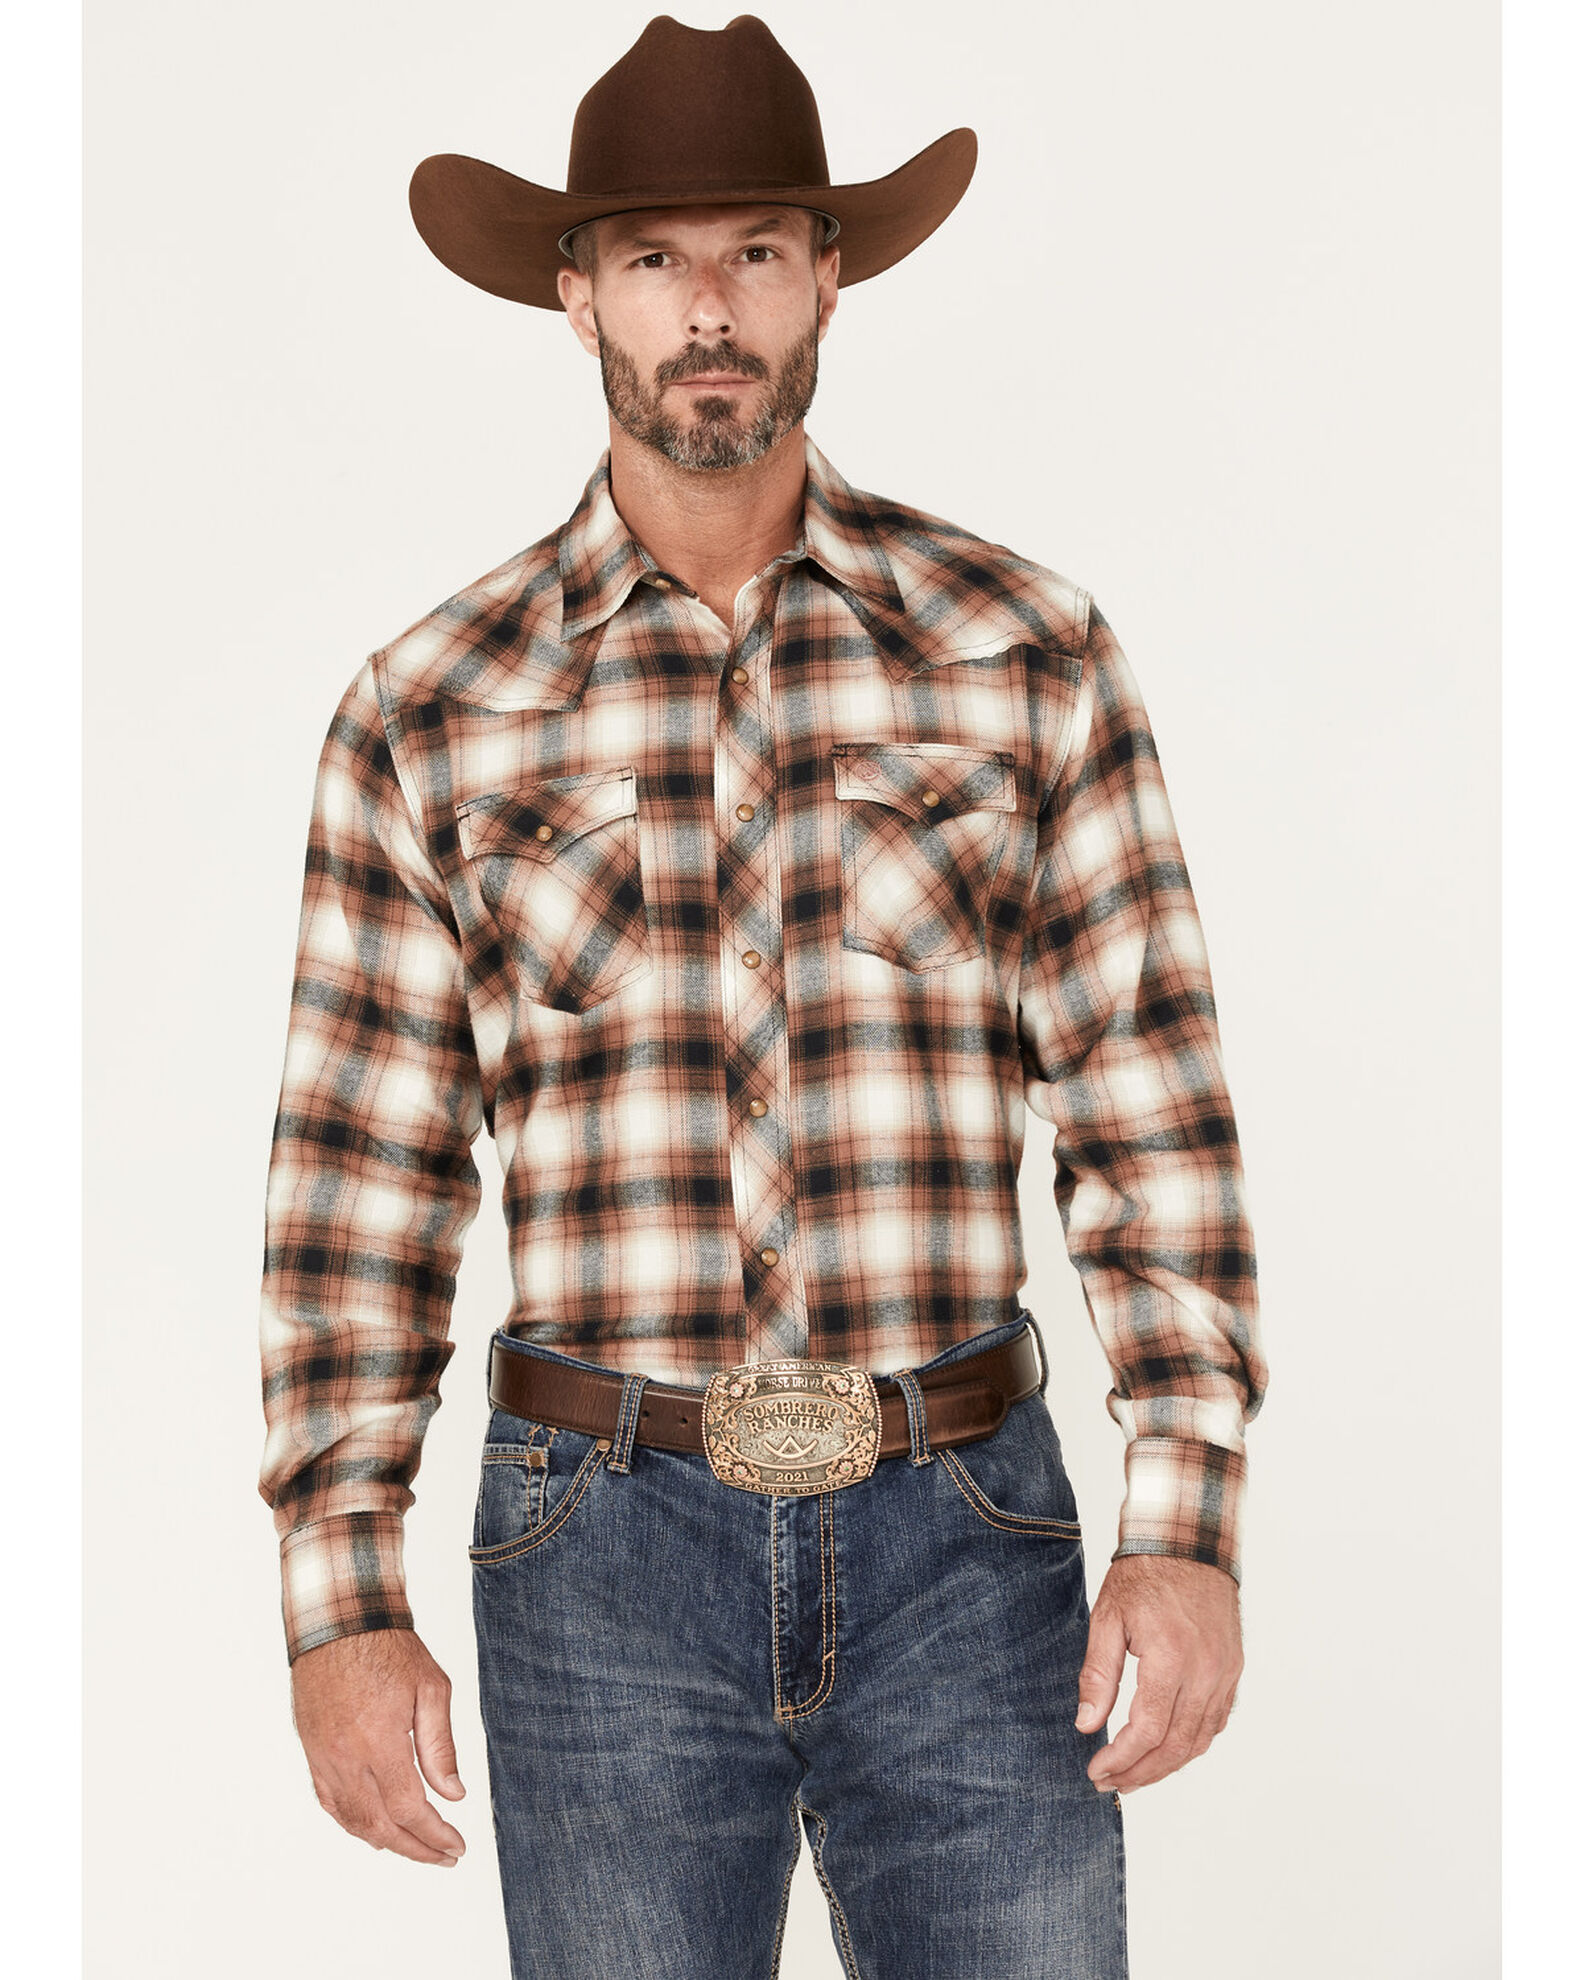 Wrangler Retro Men's Plaid Snap Western Flannel Shirt | Boot Barn